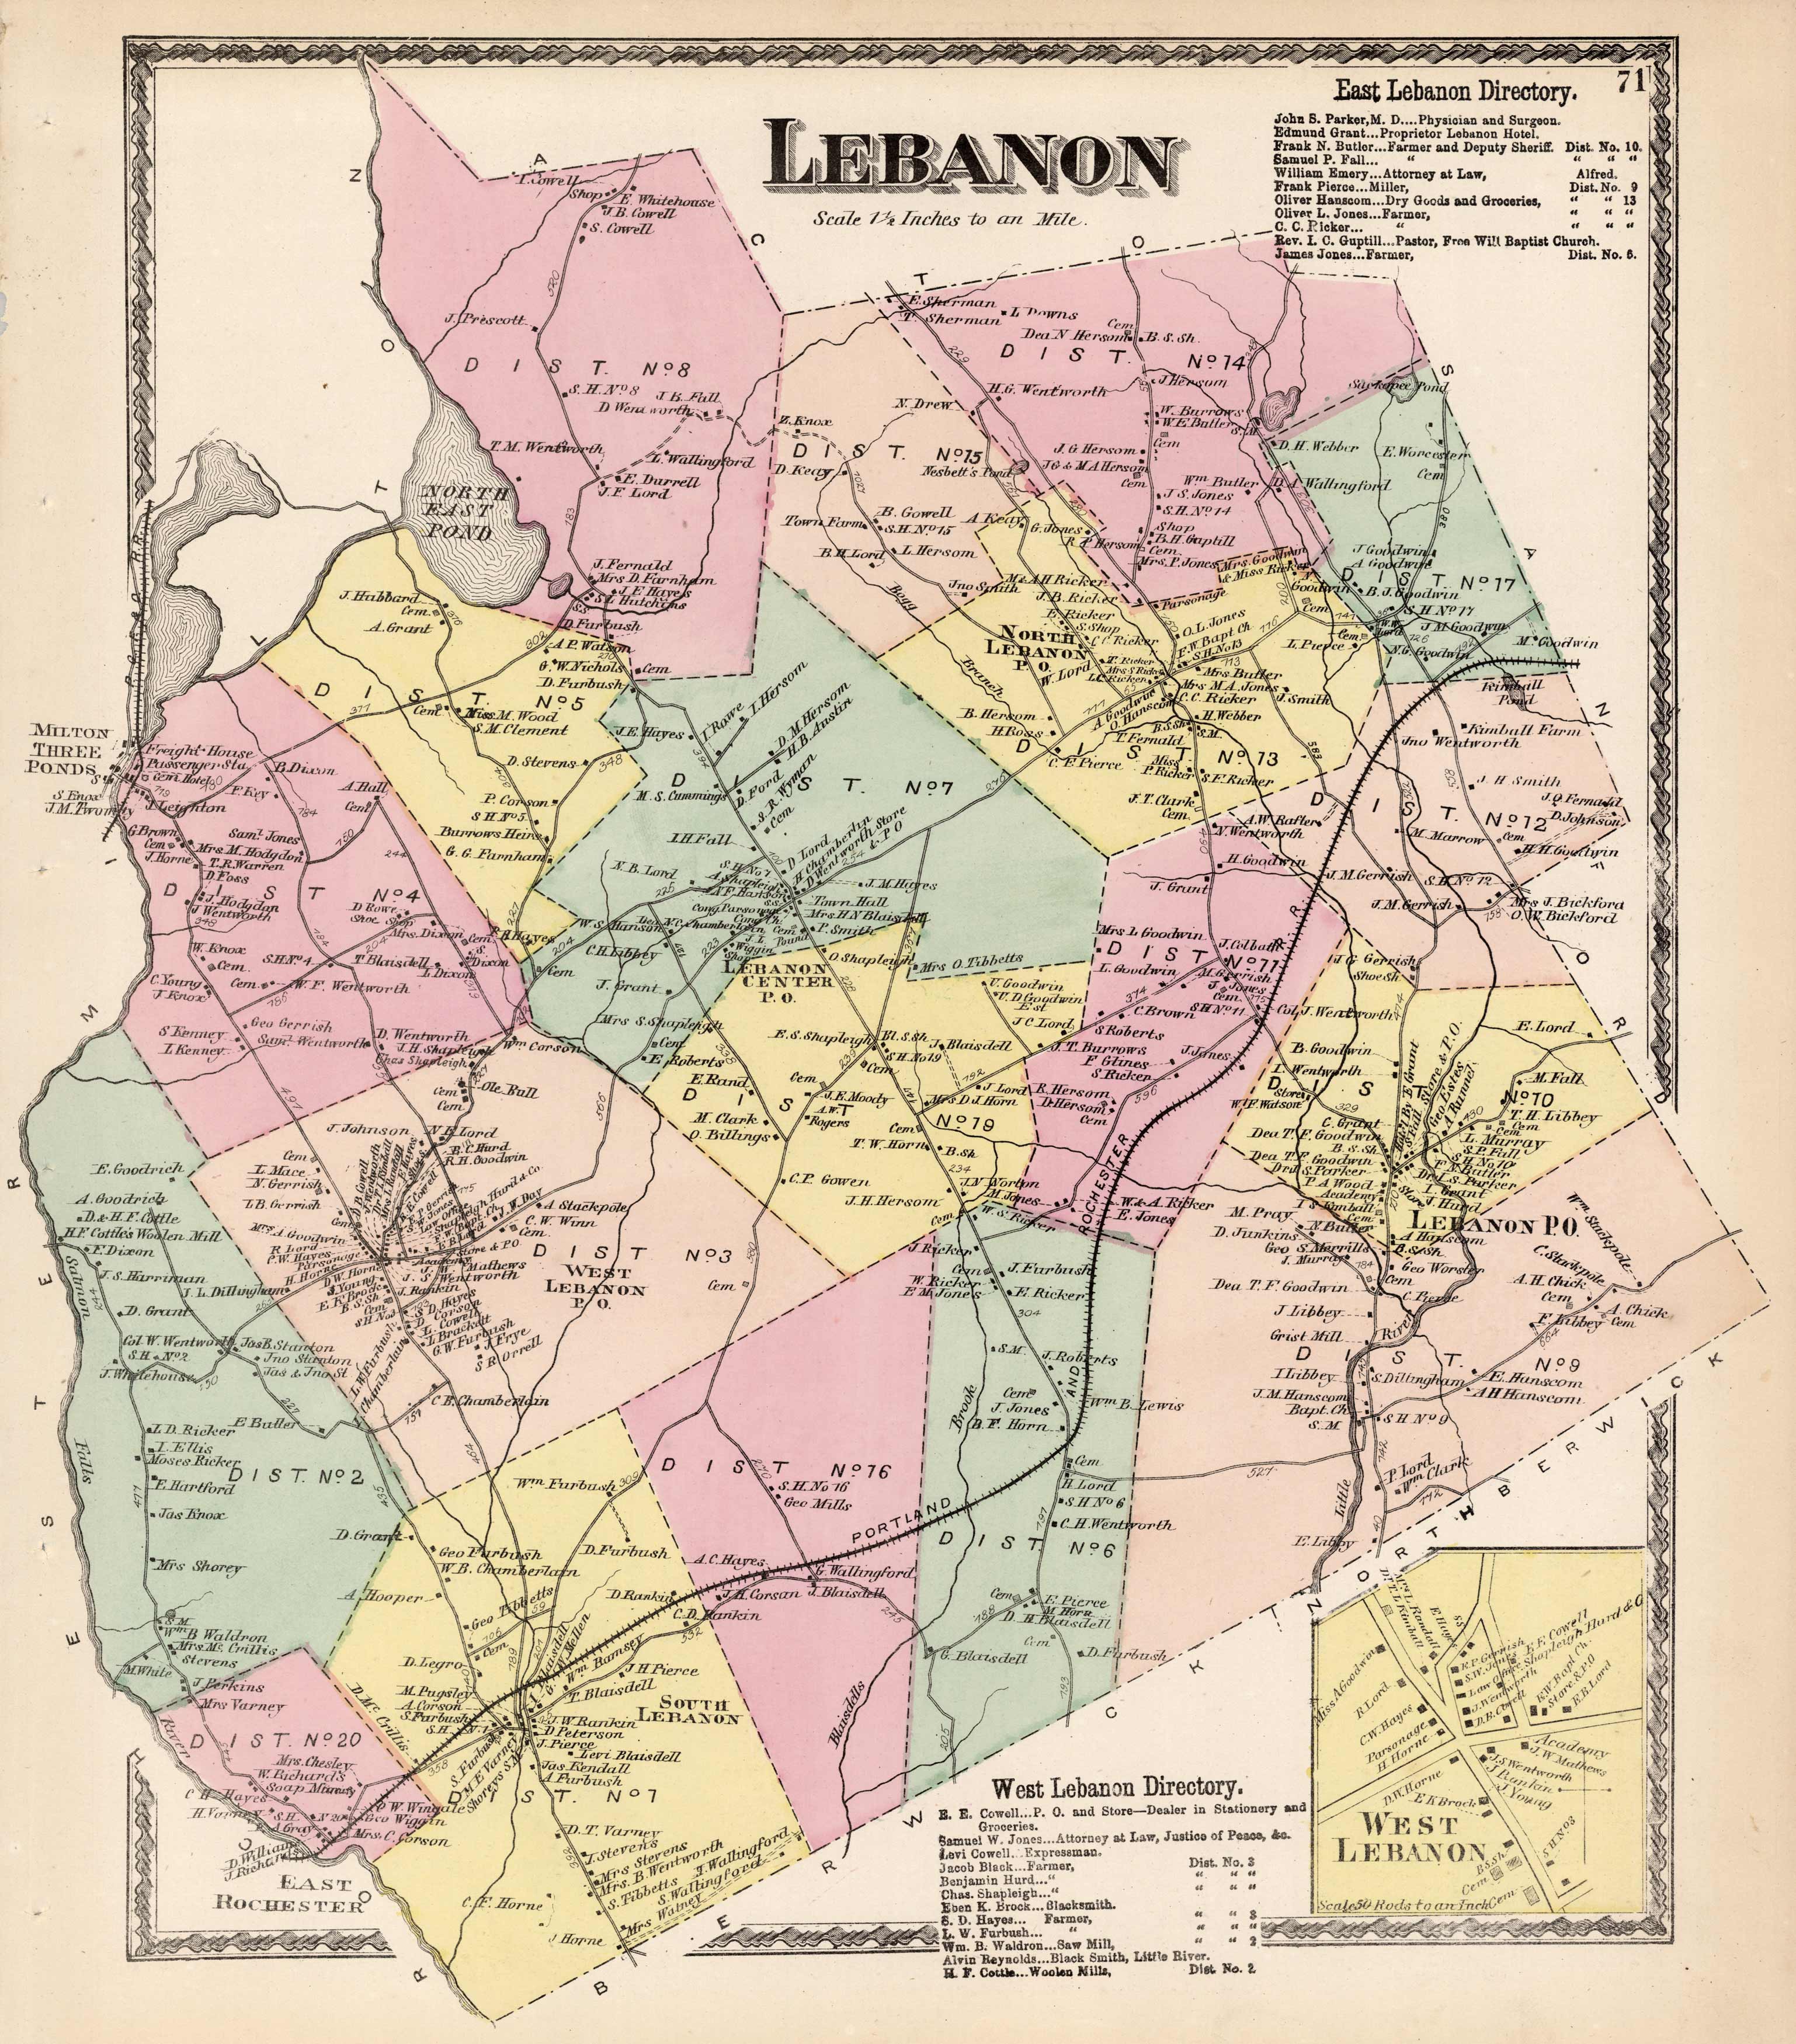 YORK 1872 LEBANON 